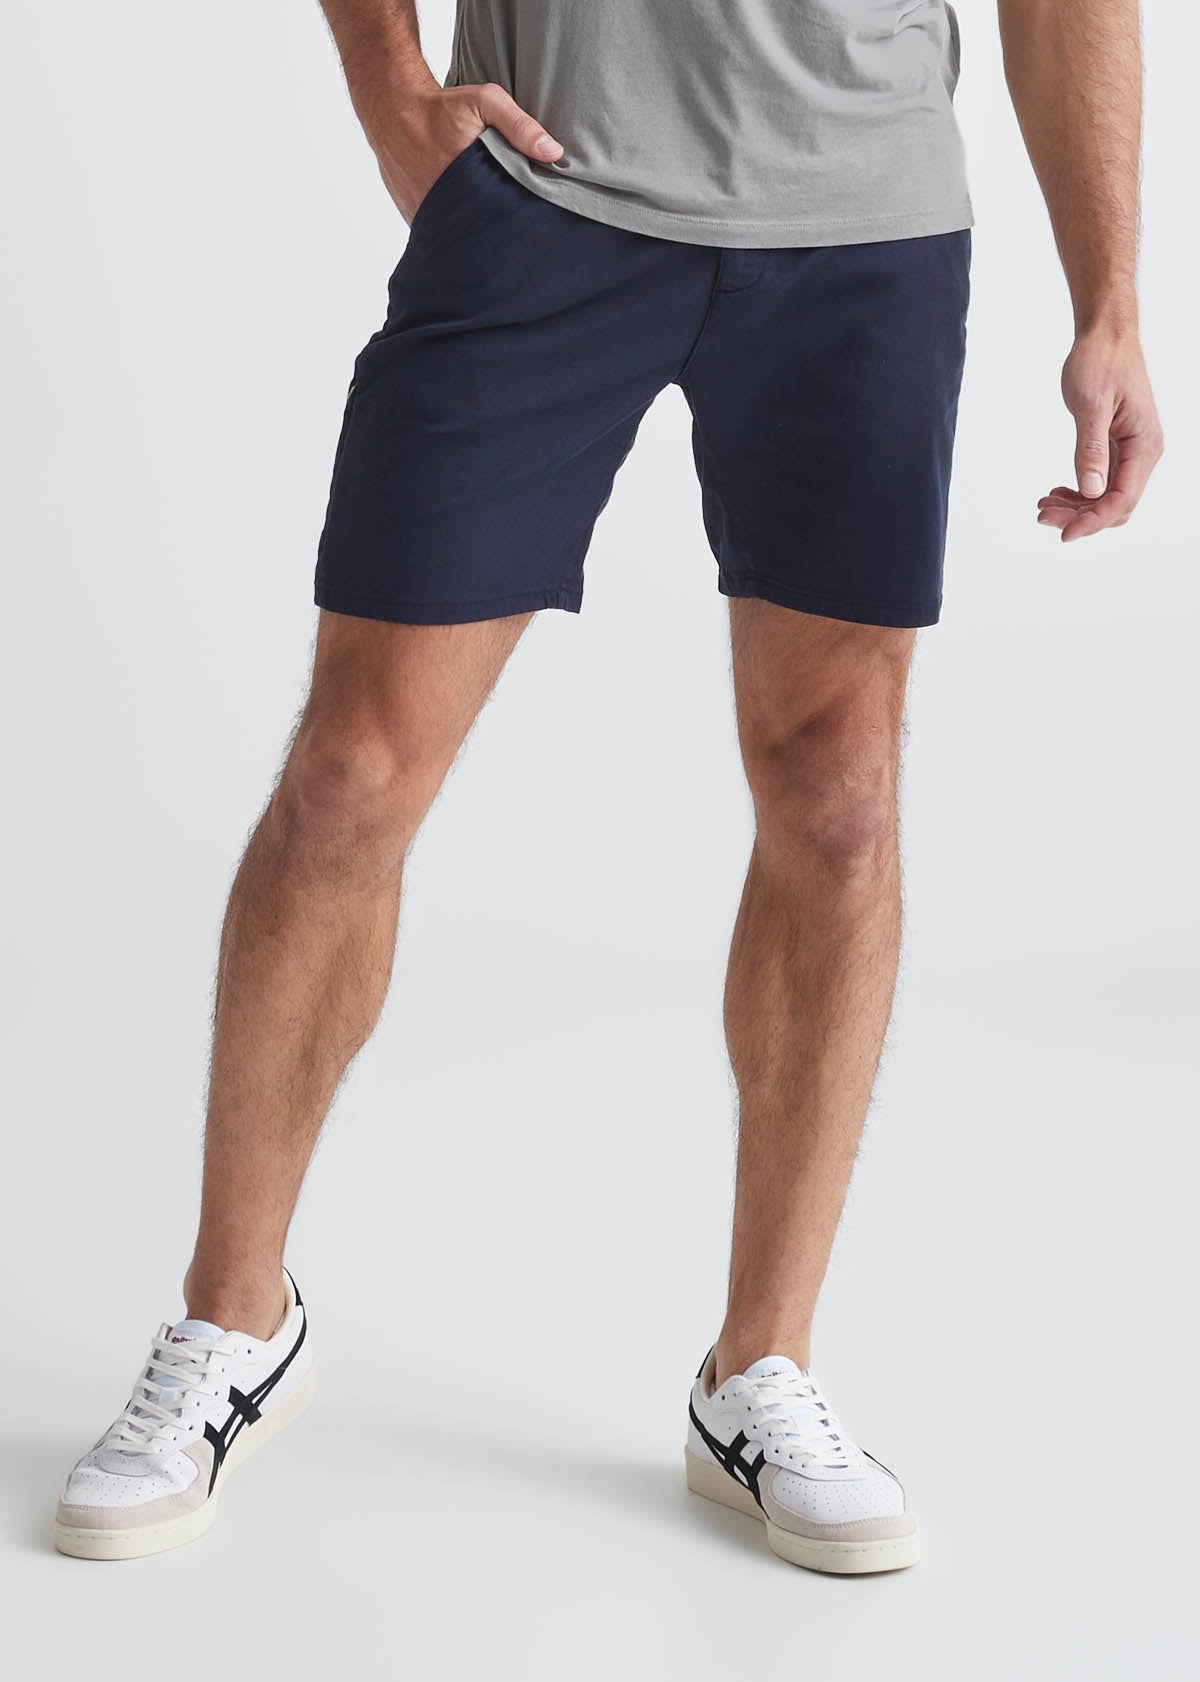 Adult 2 Inseam Hot Shorts